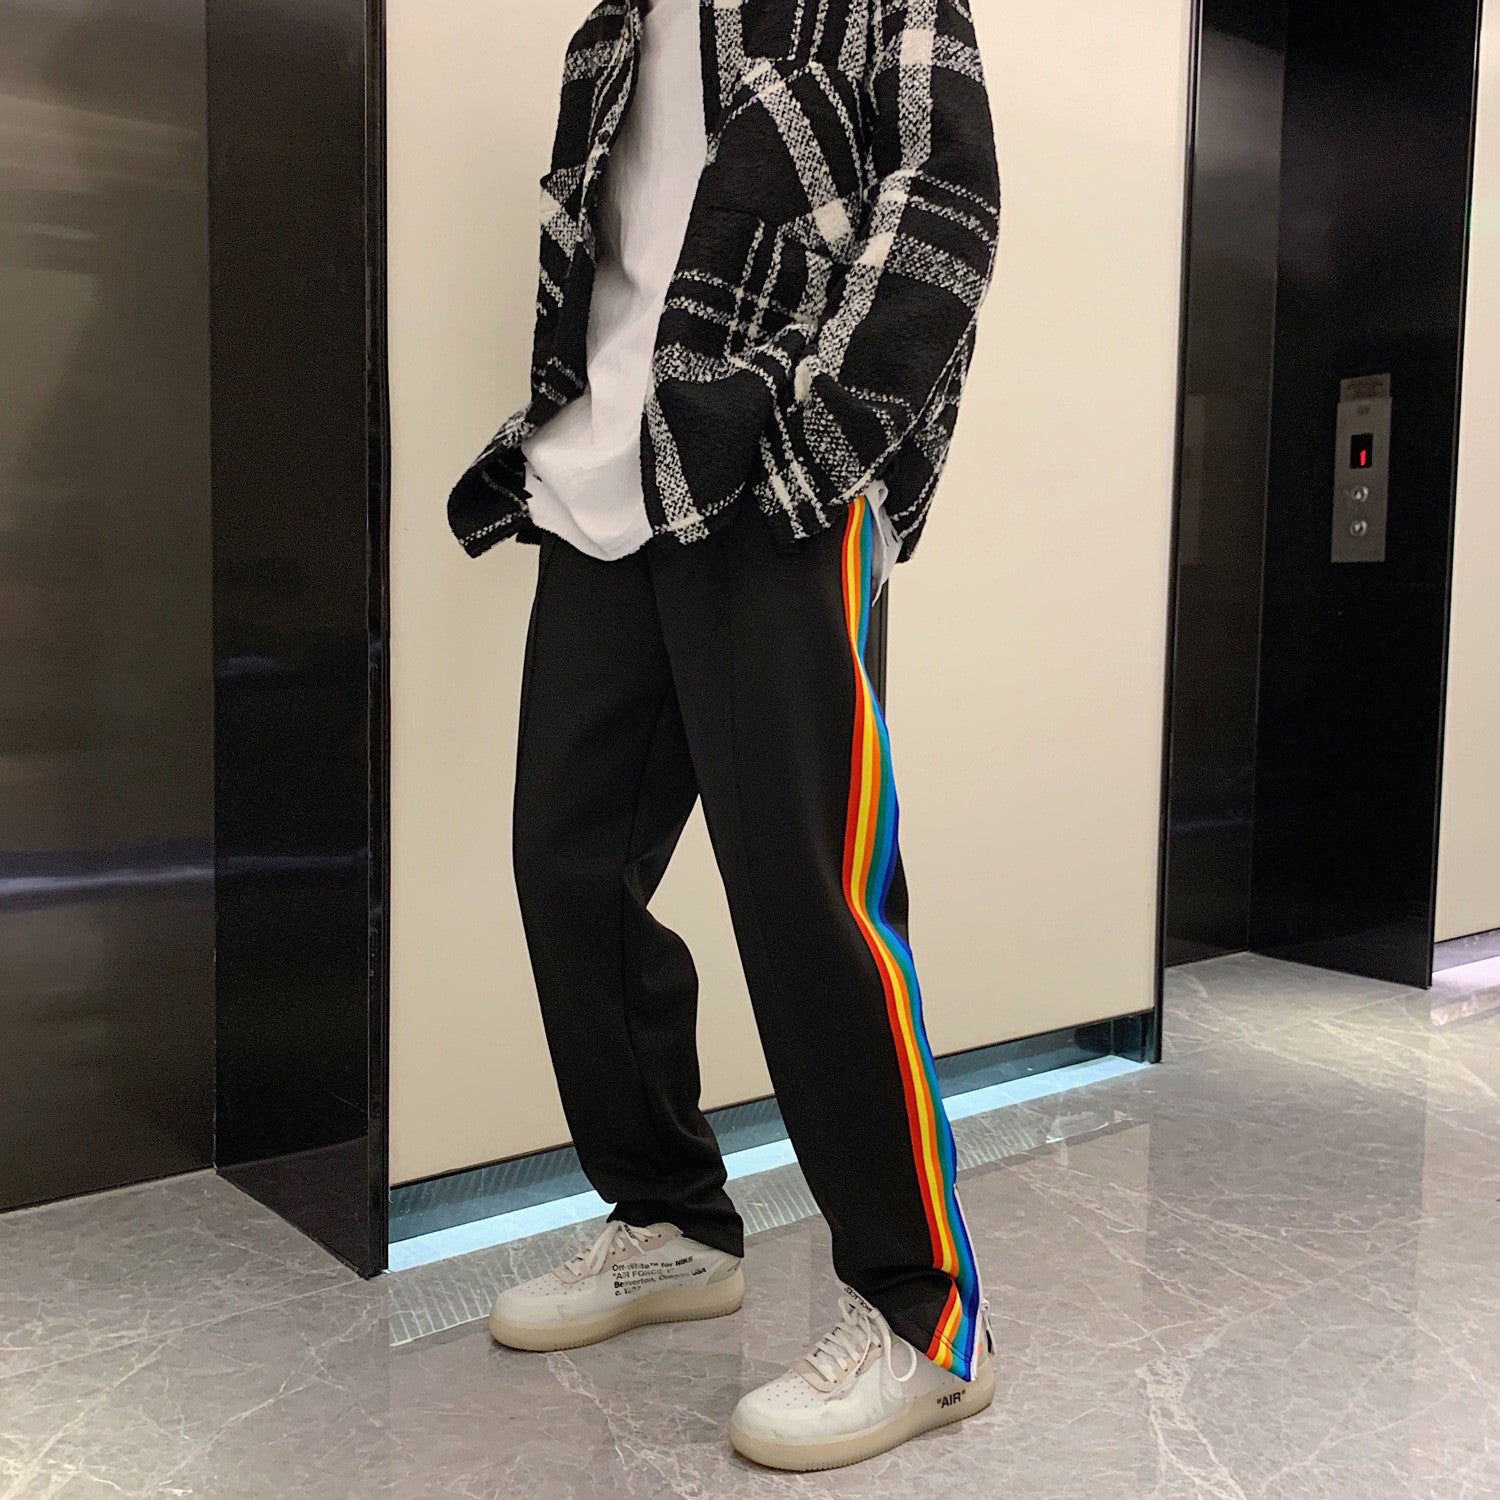 Zipper Rainbow Striped Long Pants - Rose Gold Co. Shop